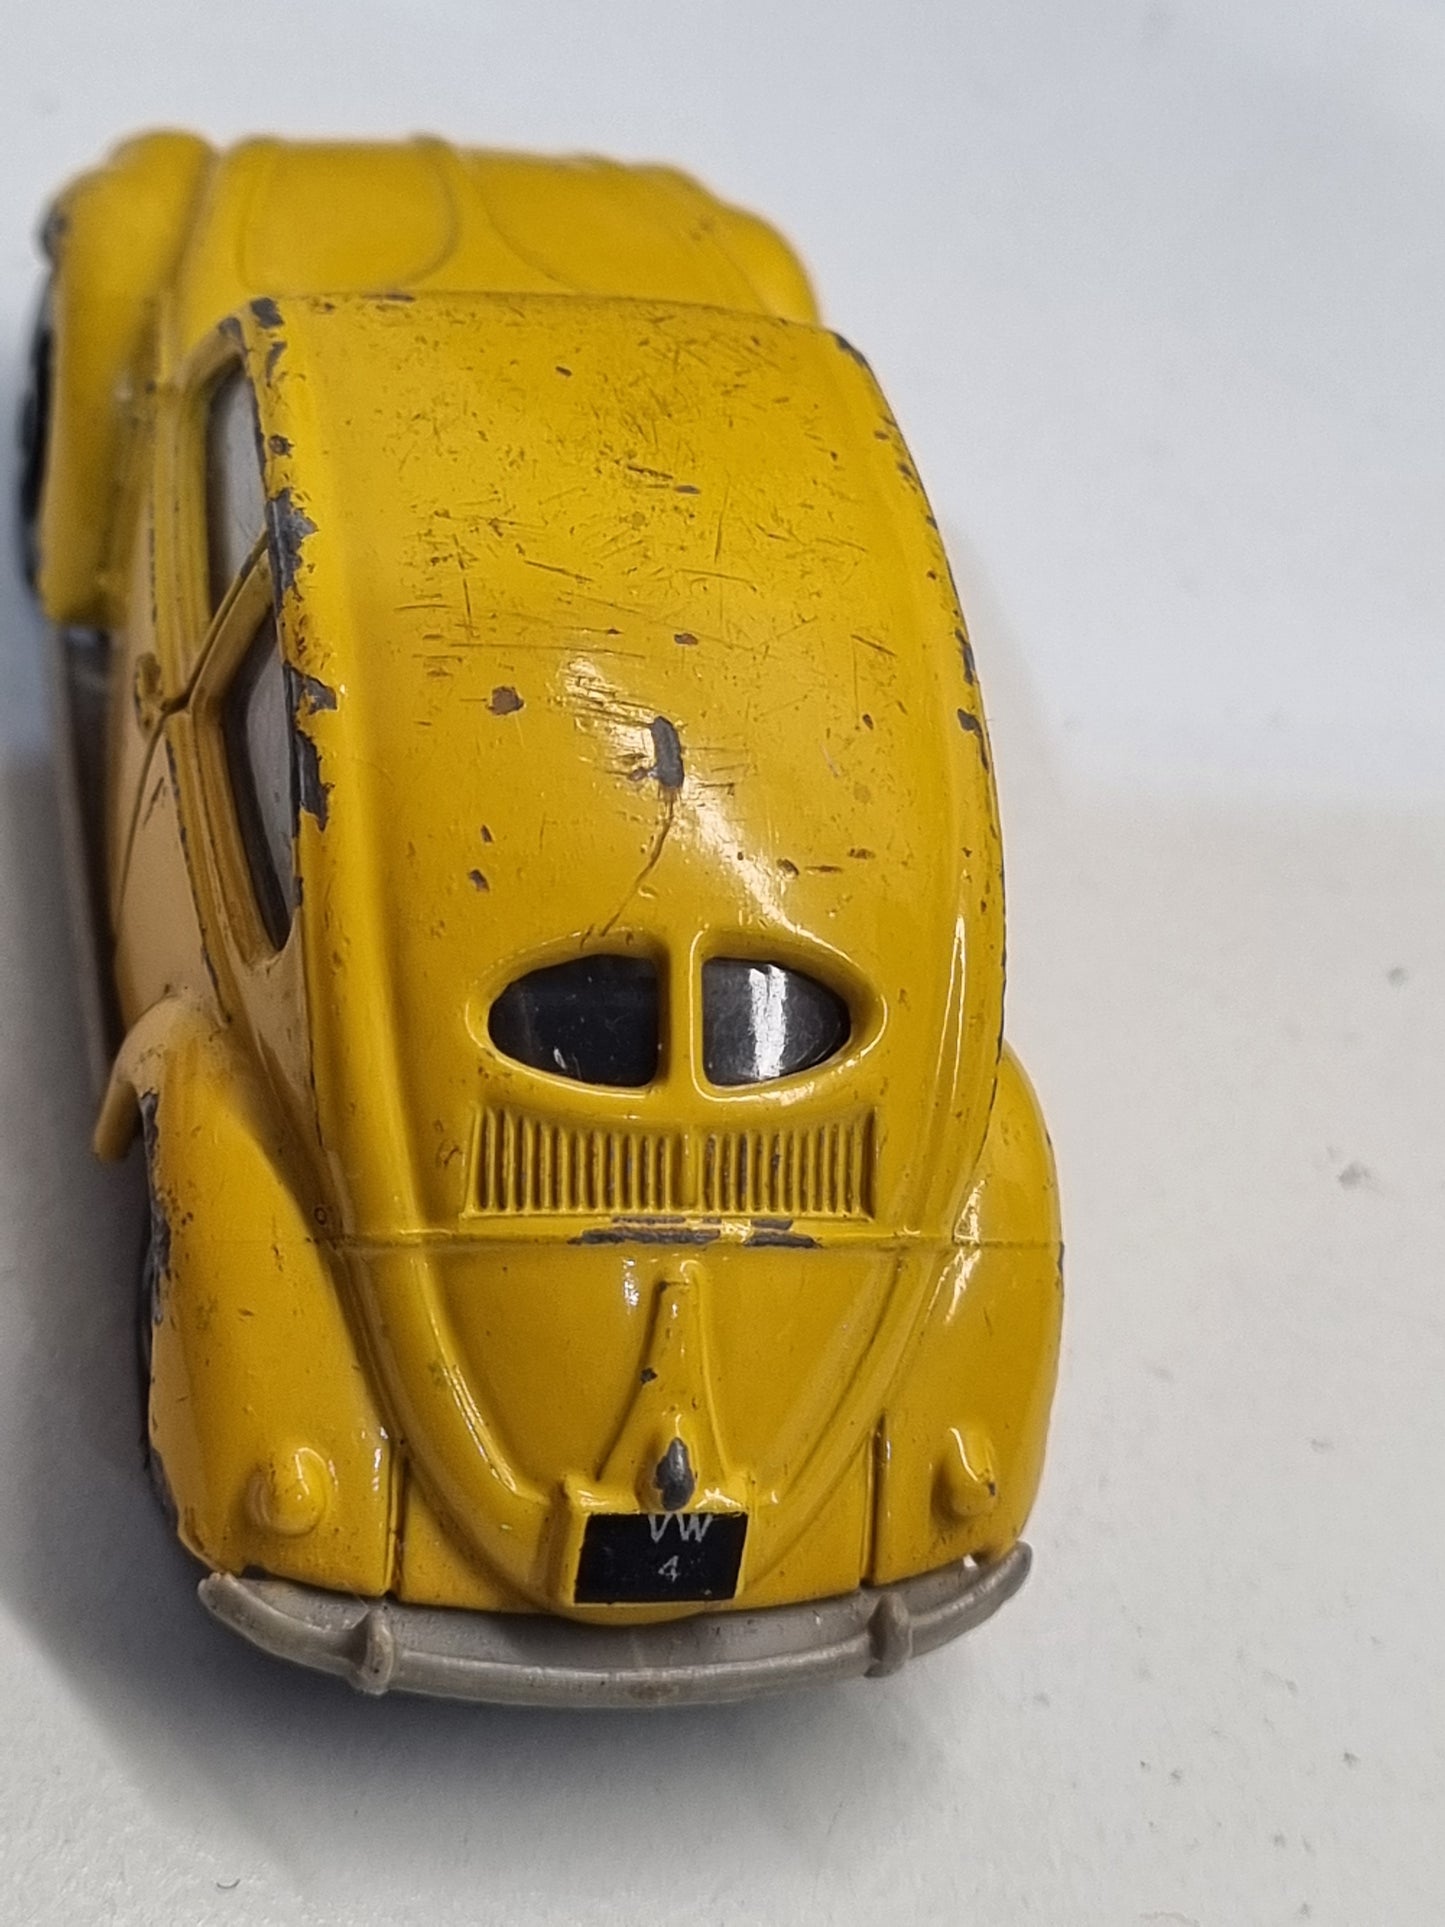 Diecast Corgi Volkswagen Beetle  1/64 - USADO